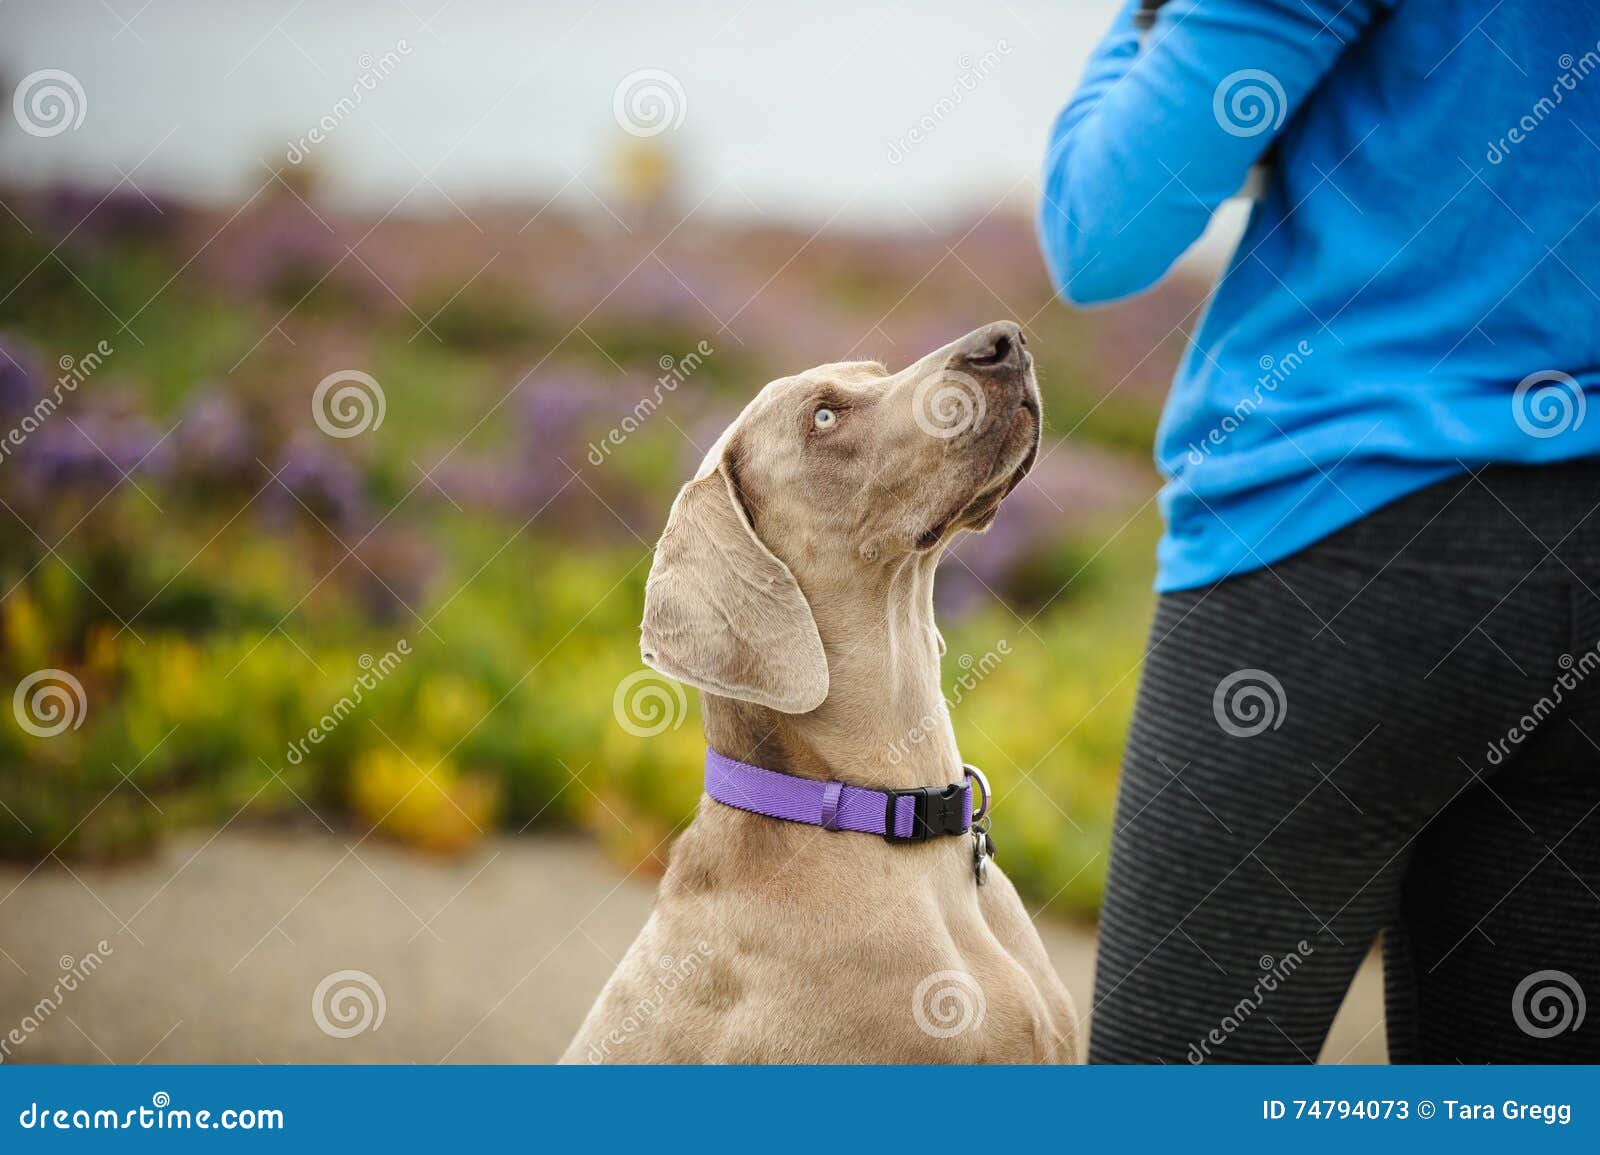 weimaraner dog looking at owner handler